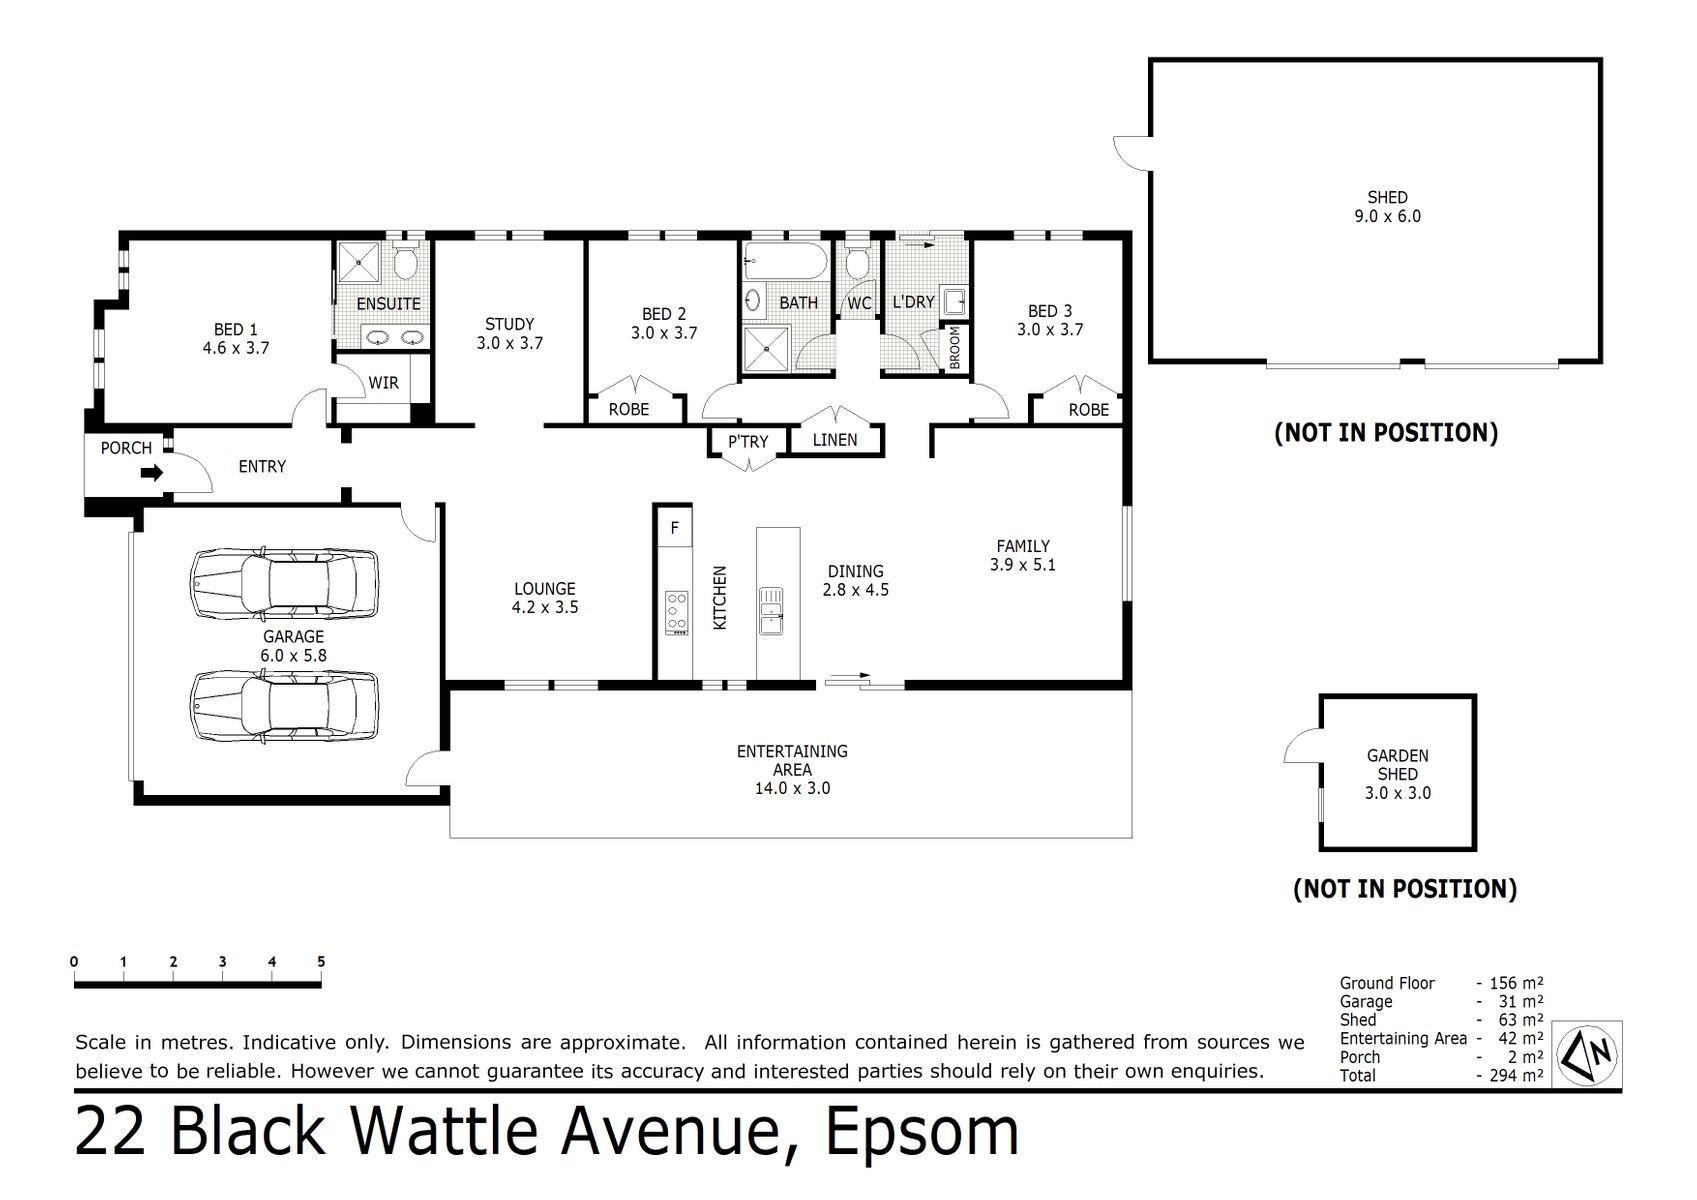 22 Black Wattle Avenue Epsom (15 APR 2021) 187sqm